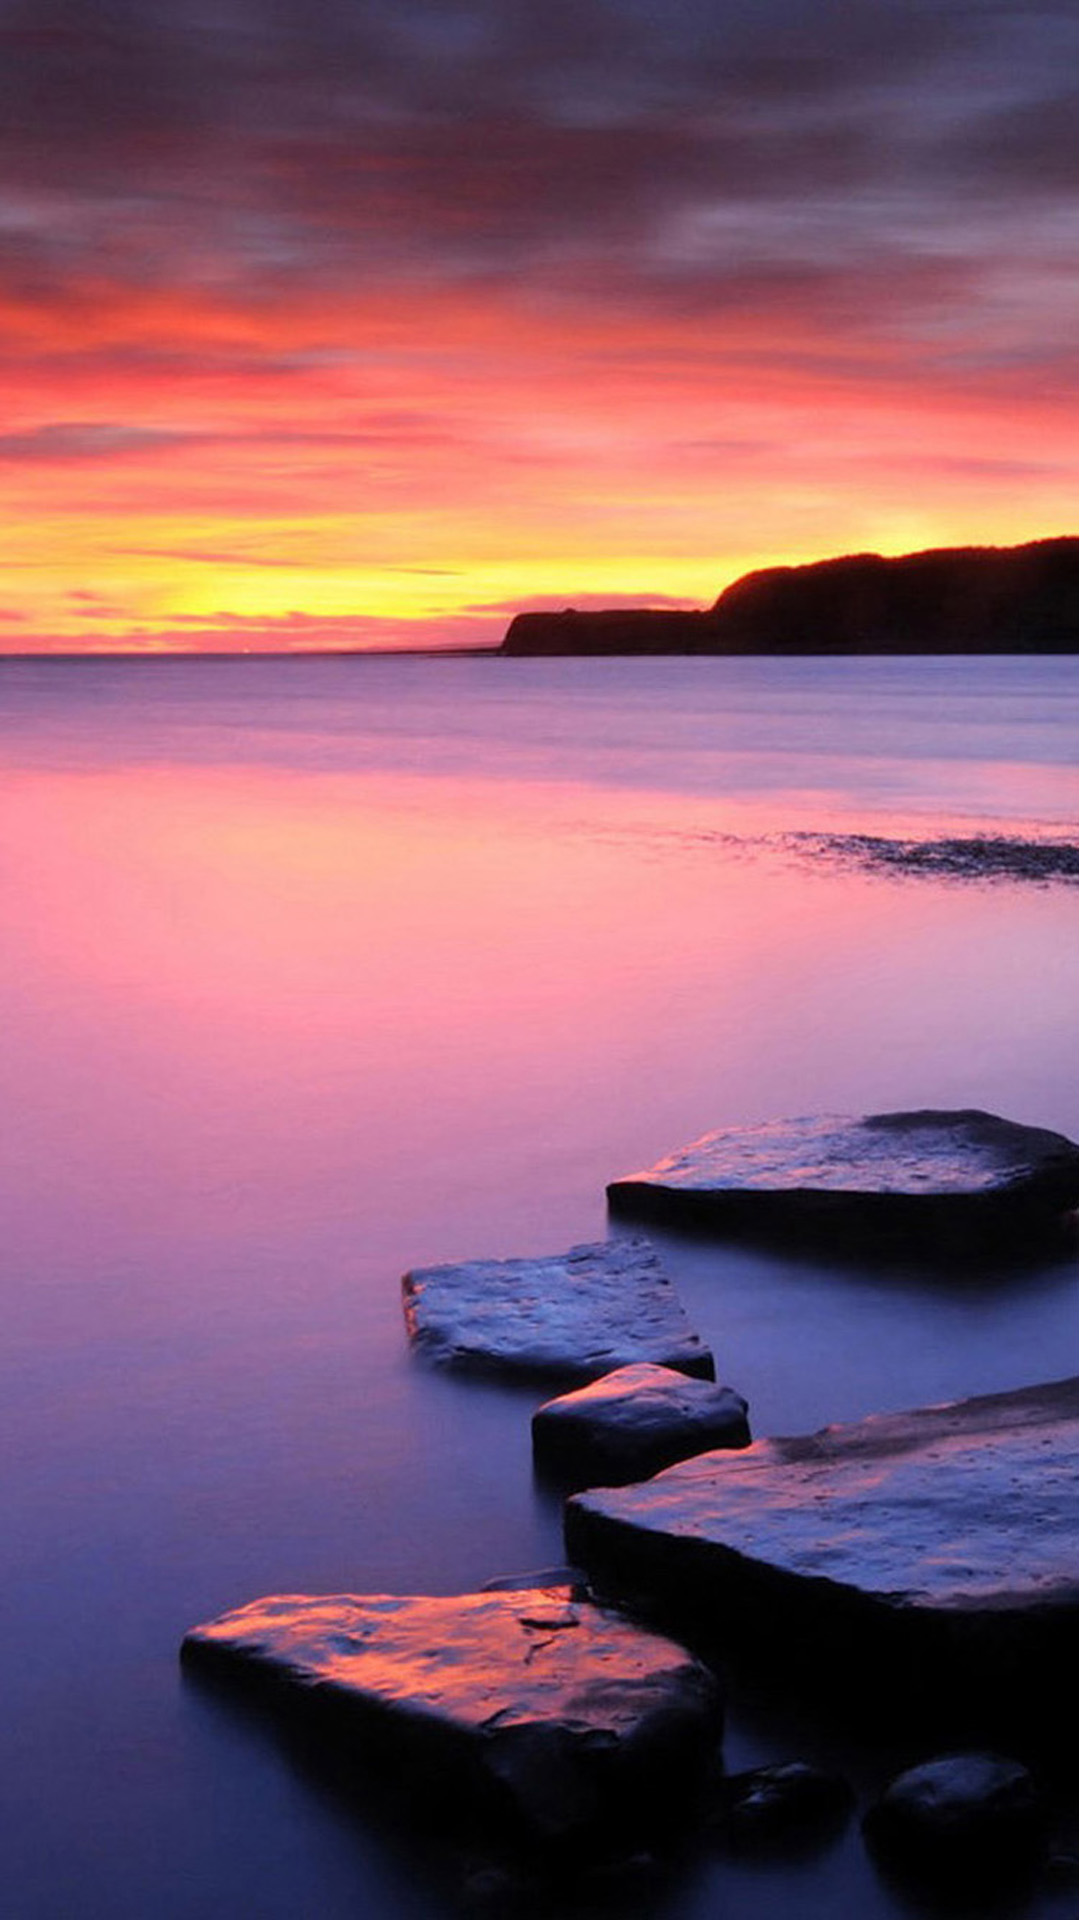 Sunset on Beach with rocks